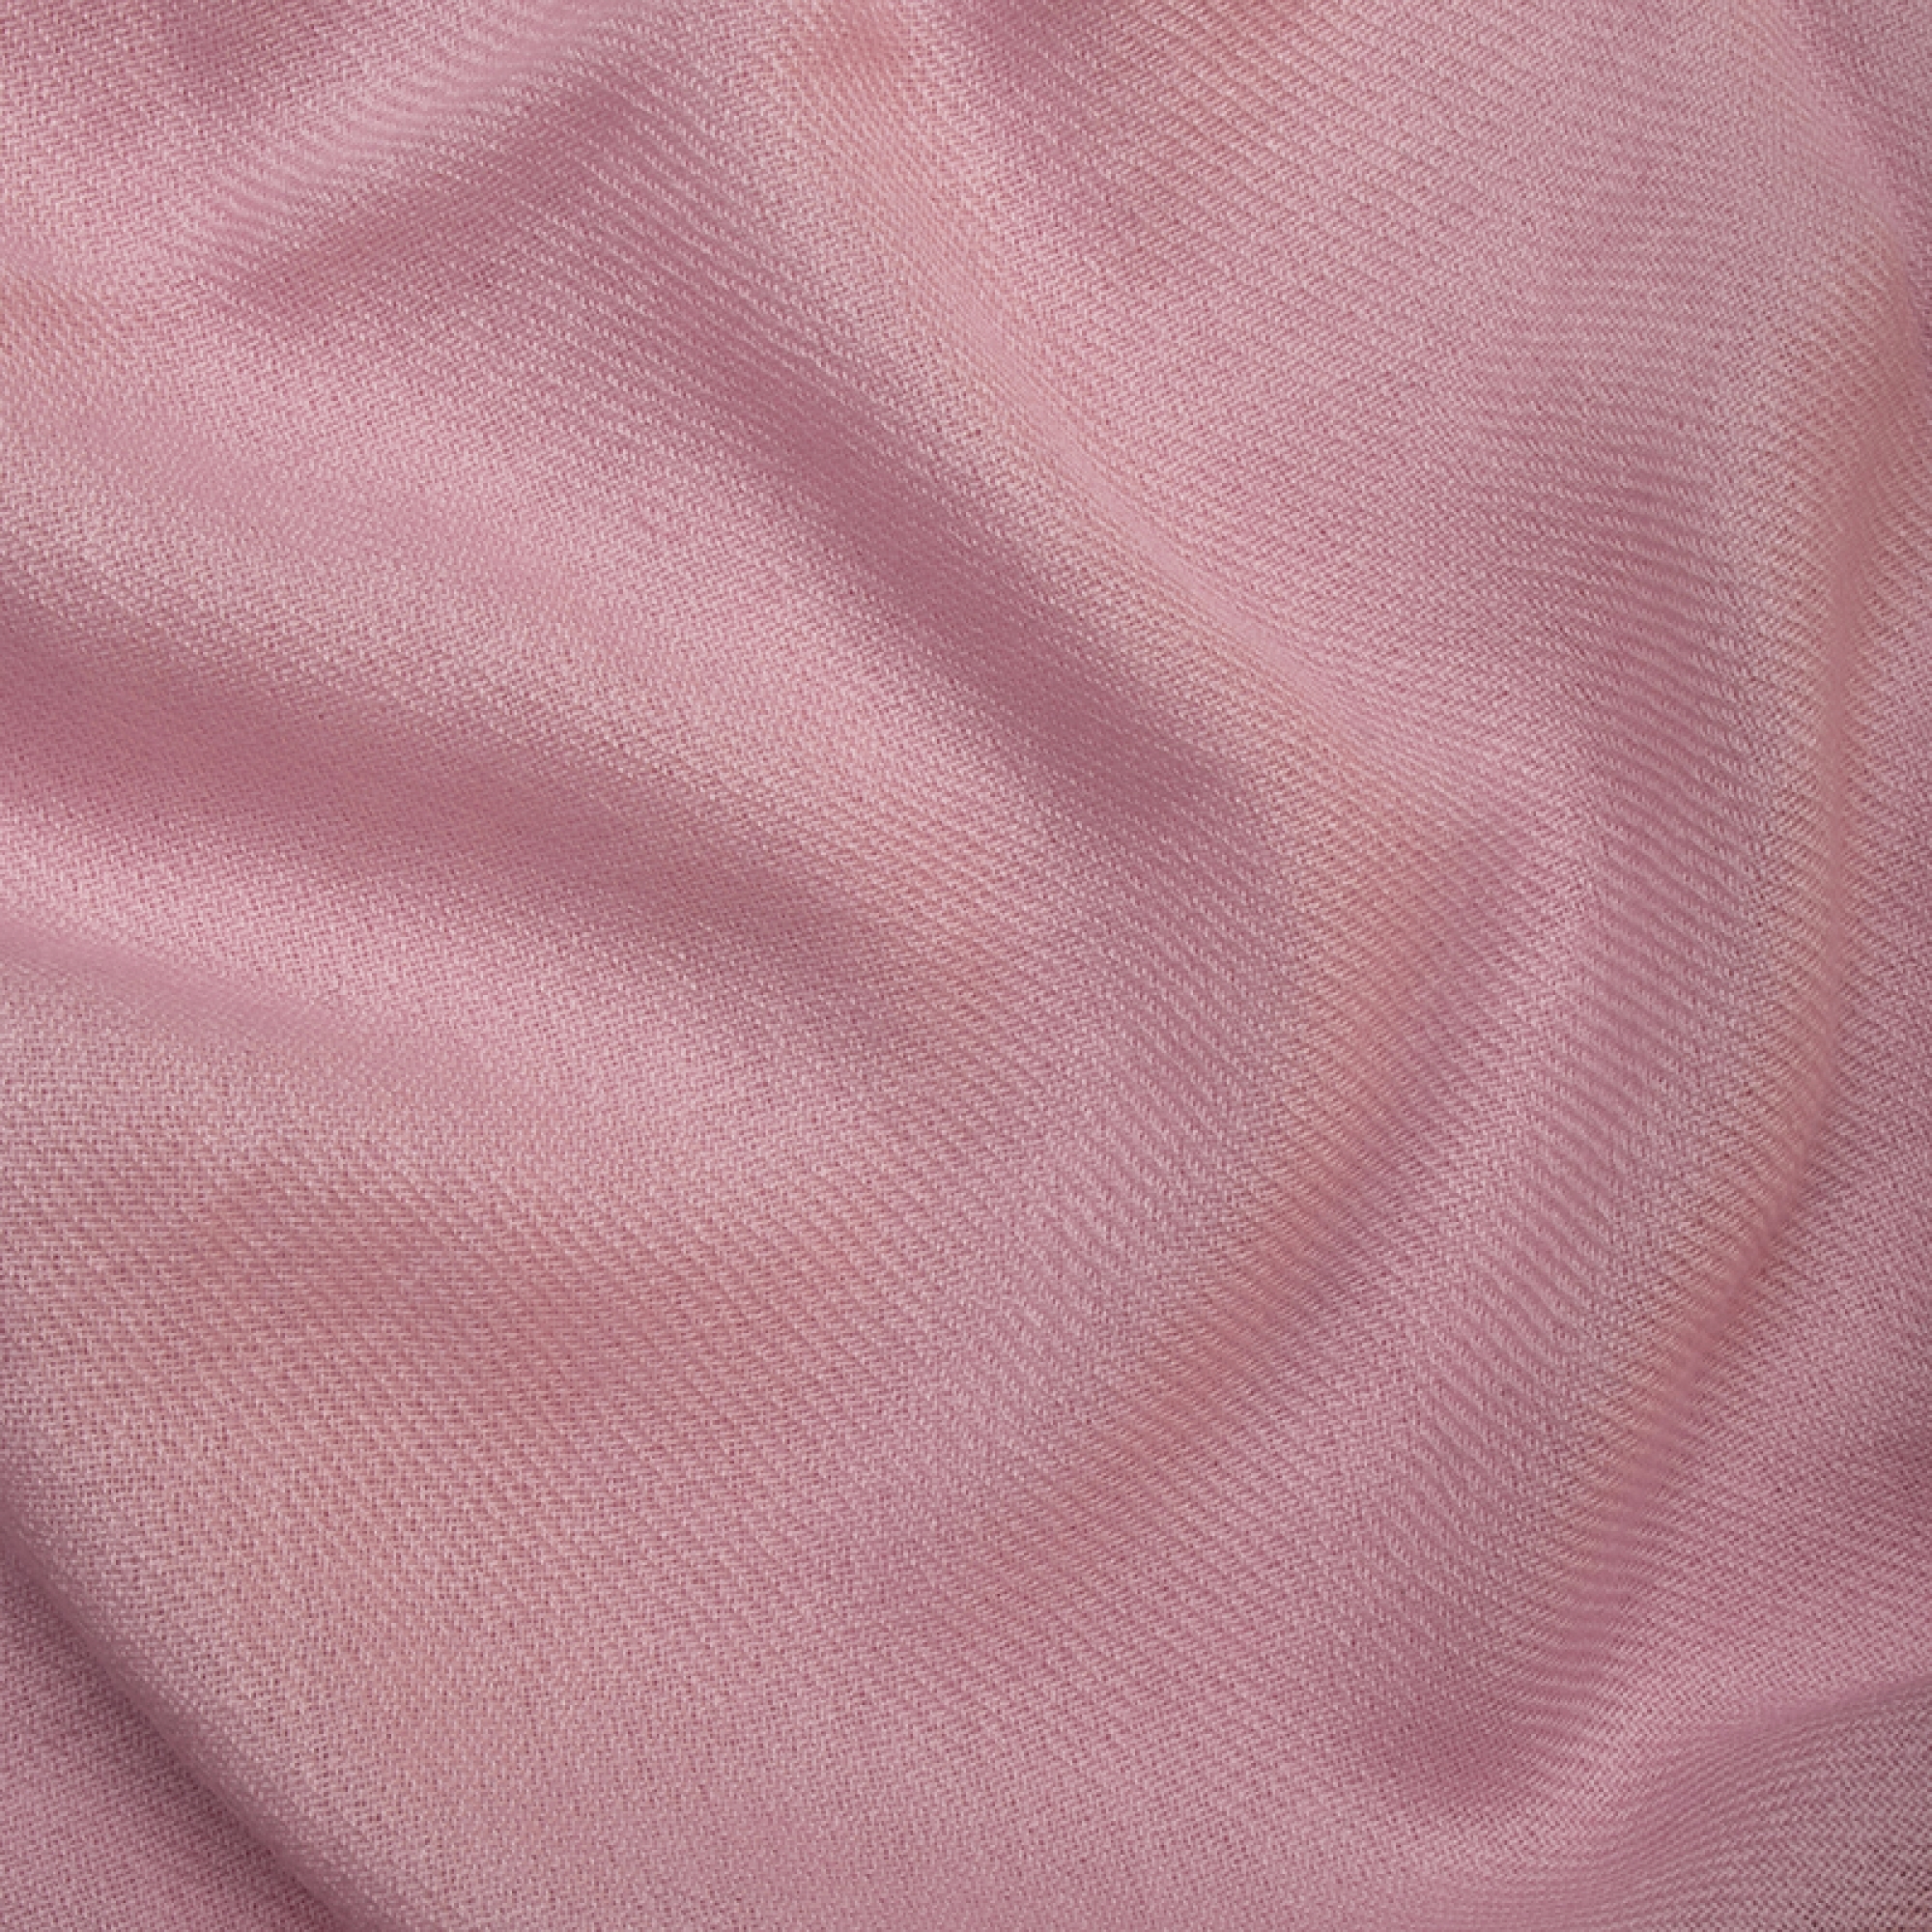 Cashmere uomo toodoo plain xl 240 x 260 rosa pallido 240 x 260 cm